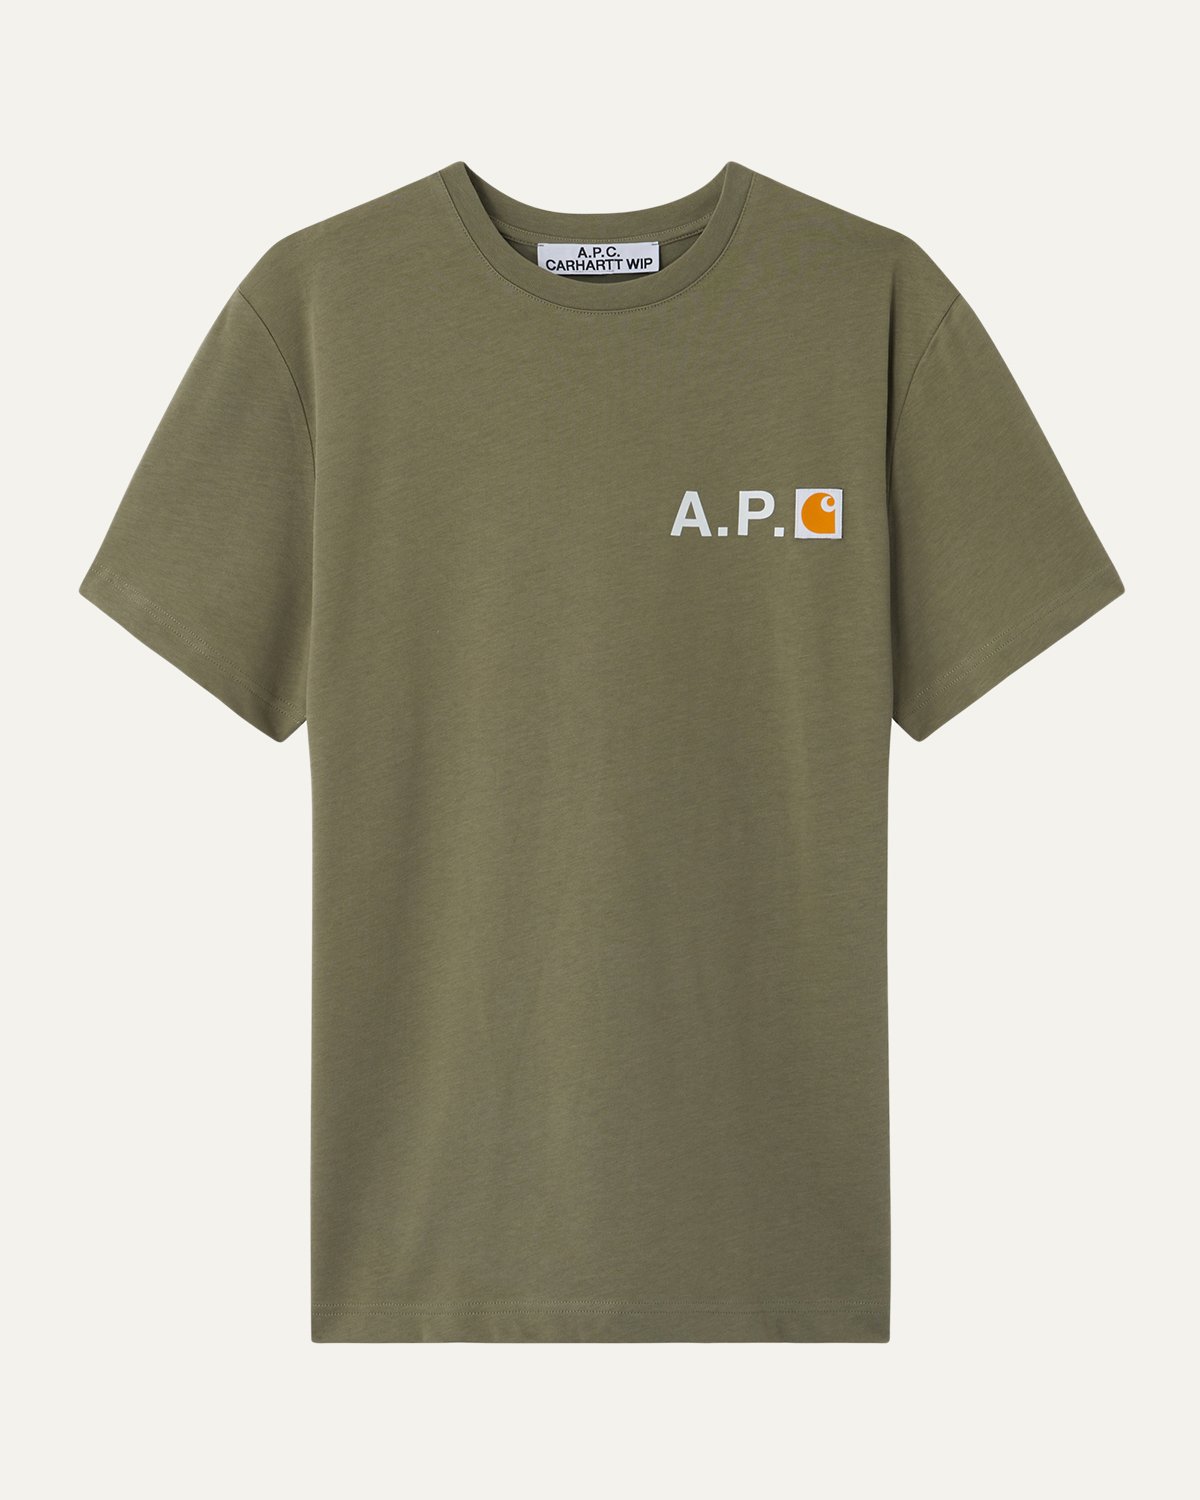 A.P.C. x Carhartt WIP - Fire T-Shirt Khaki - Tops - Green - Image 1